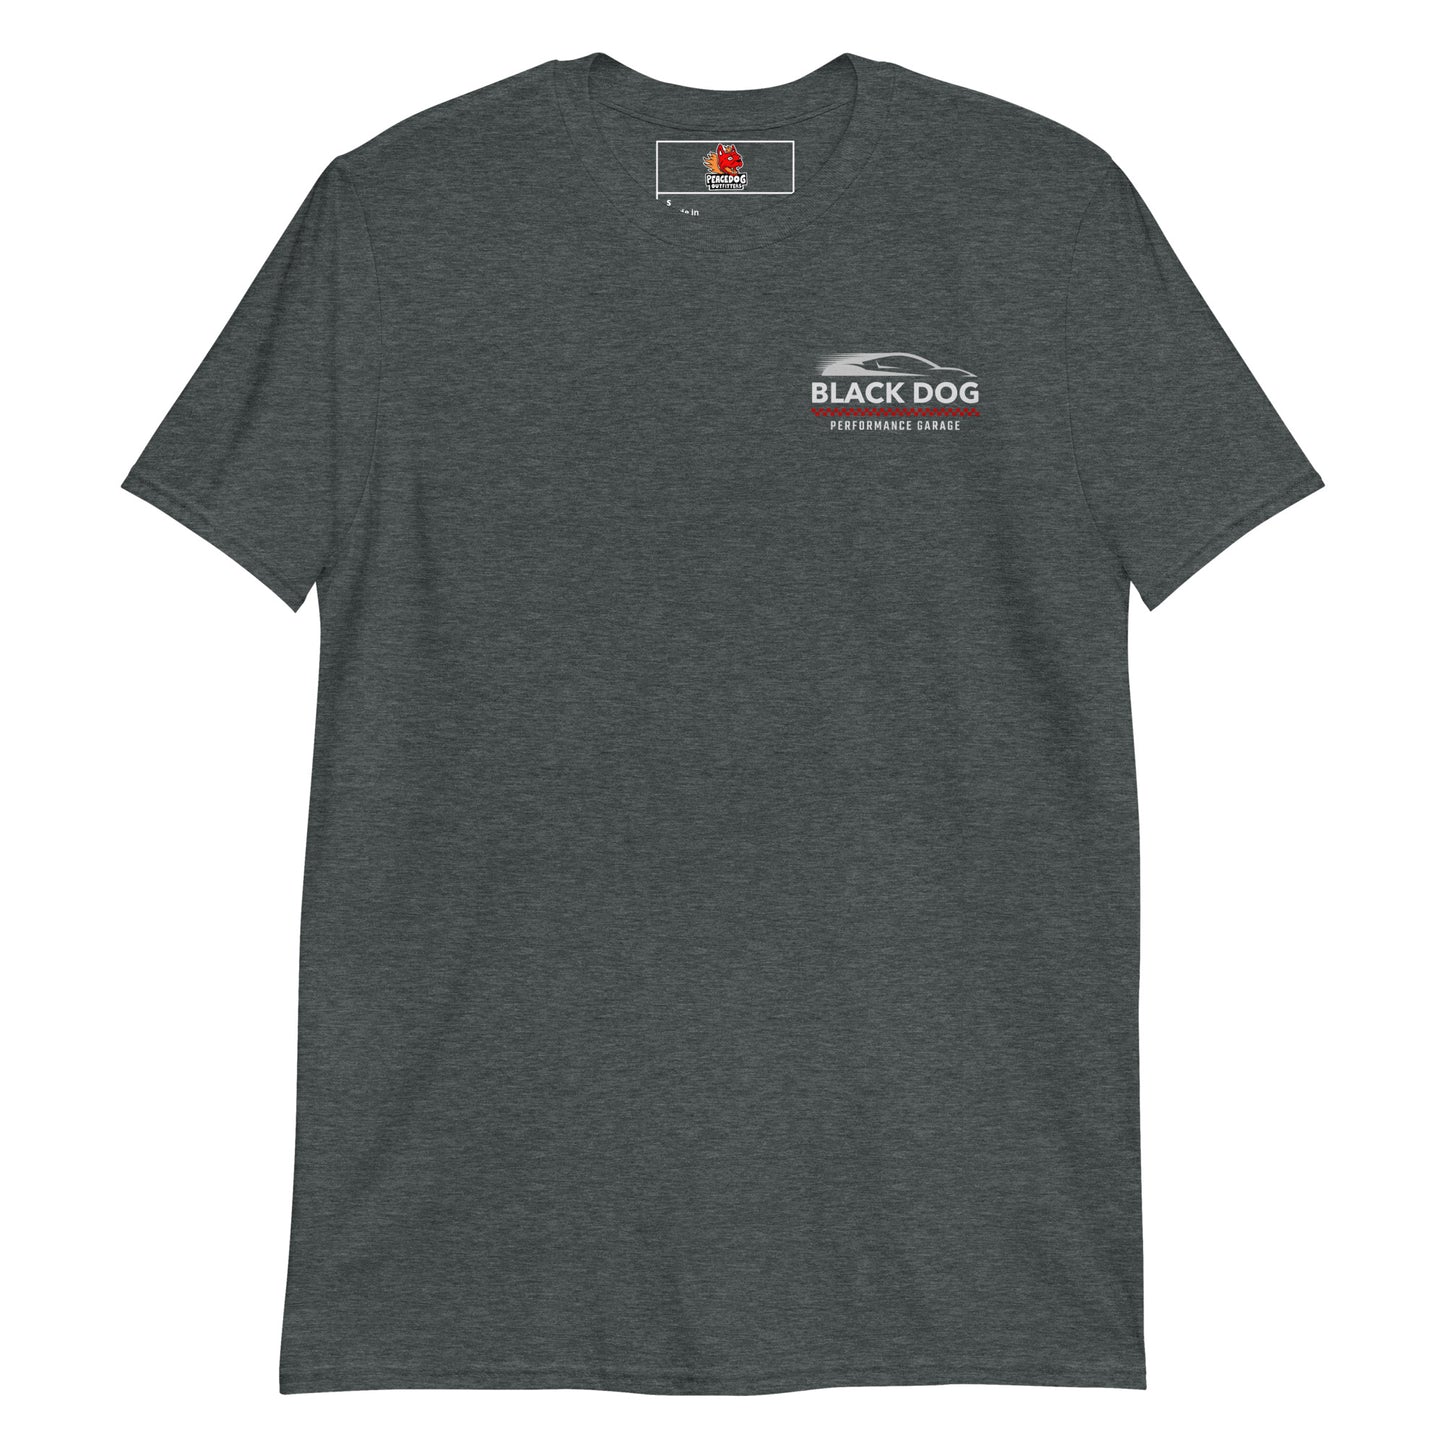 Performance Garage T-Shirt